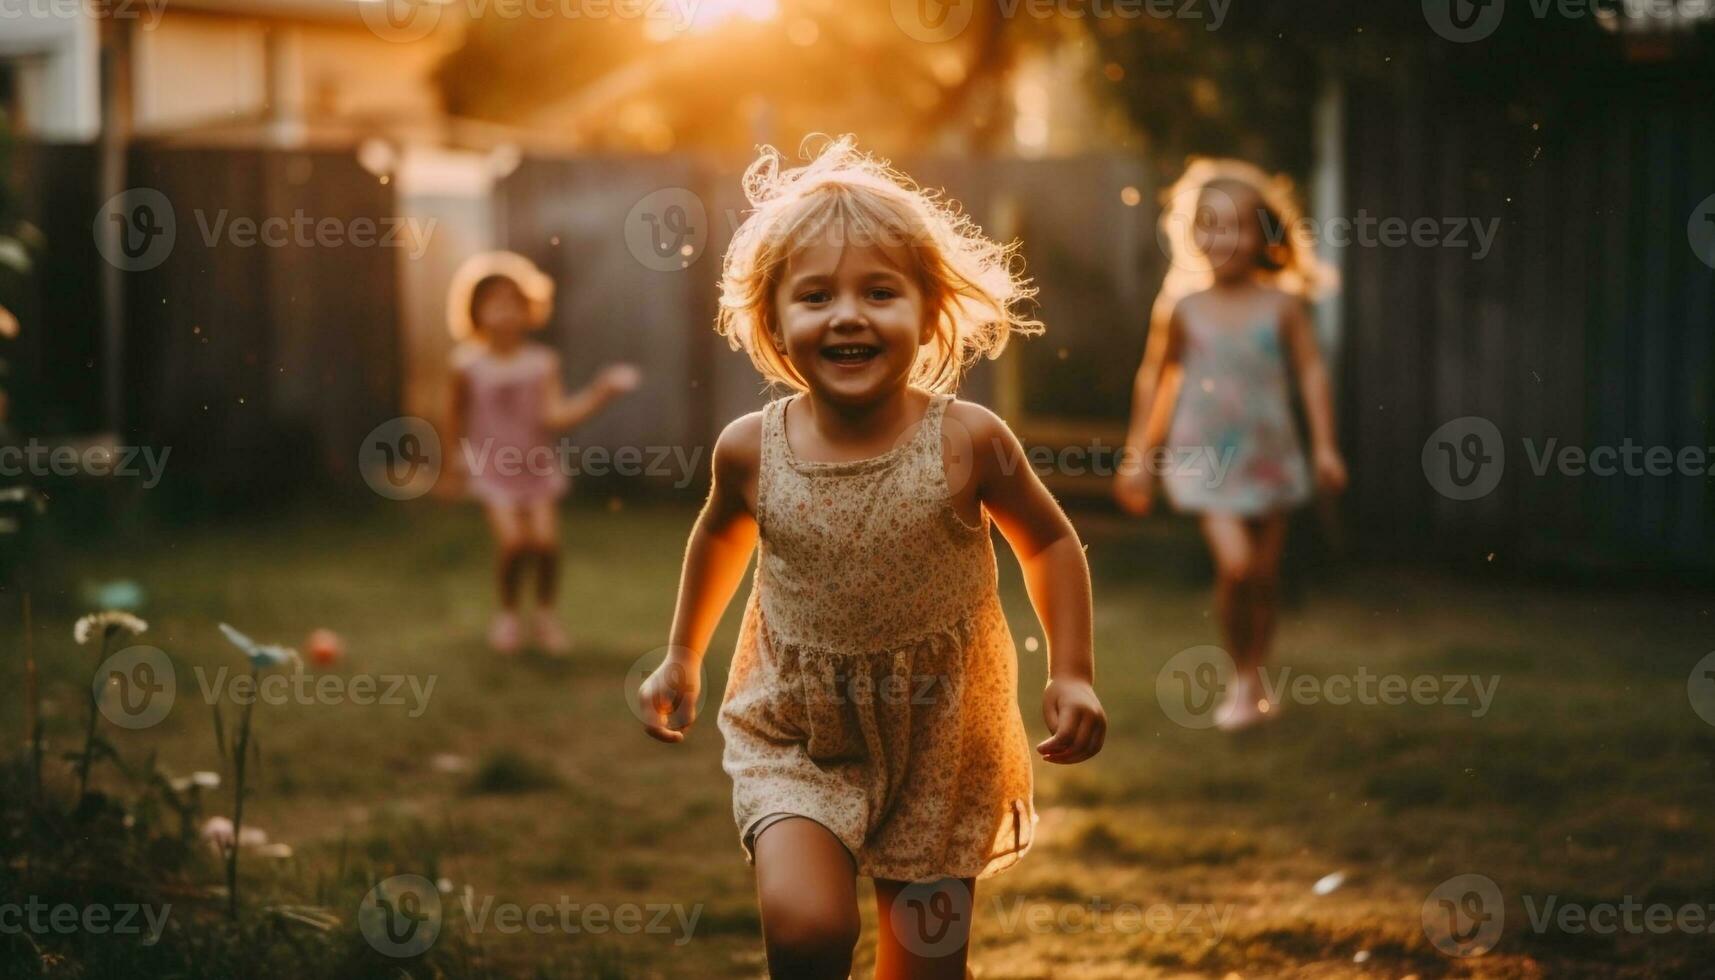 glimlachen meisjes rennen zorgeloos in natuur weide gegenereerd door ai foto